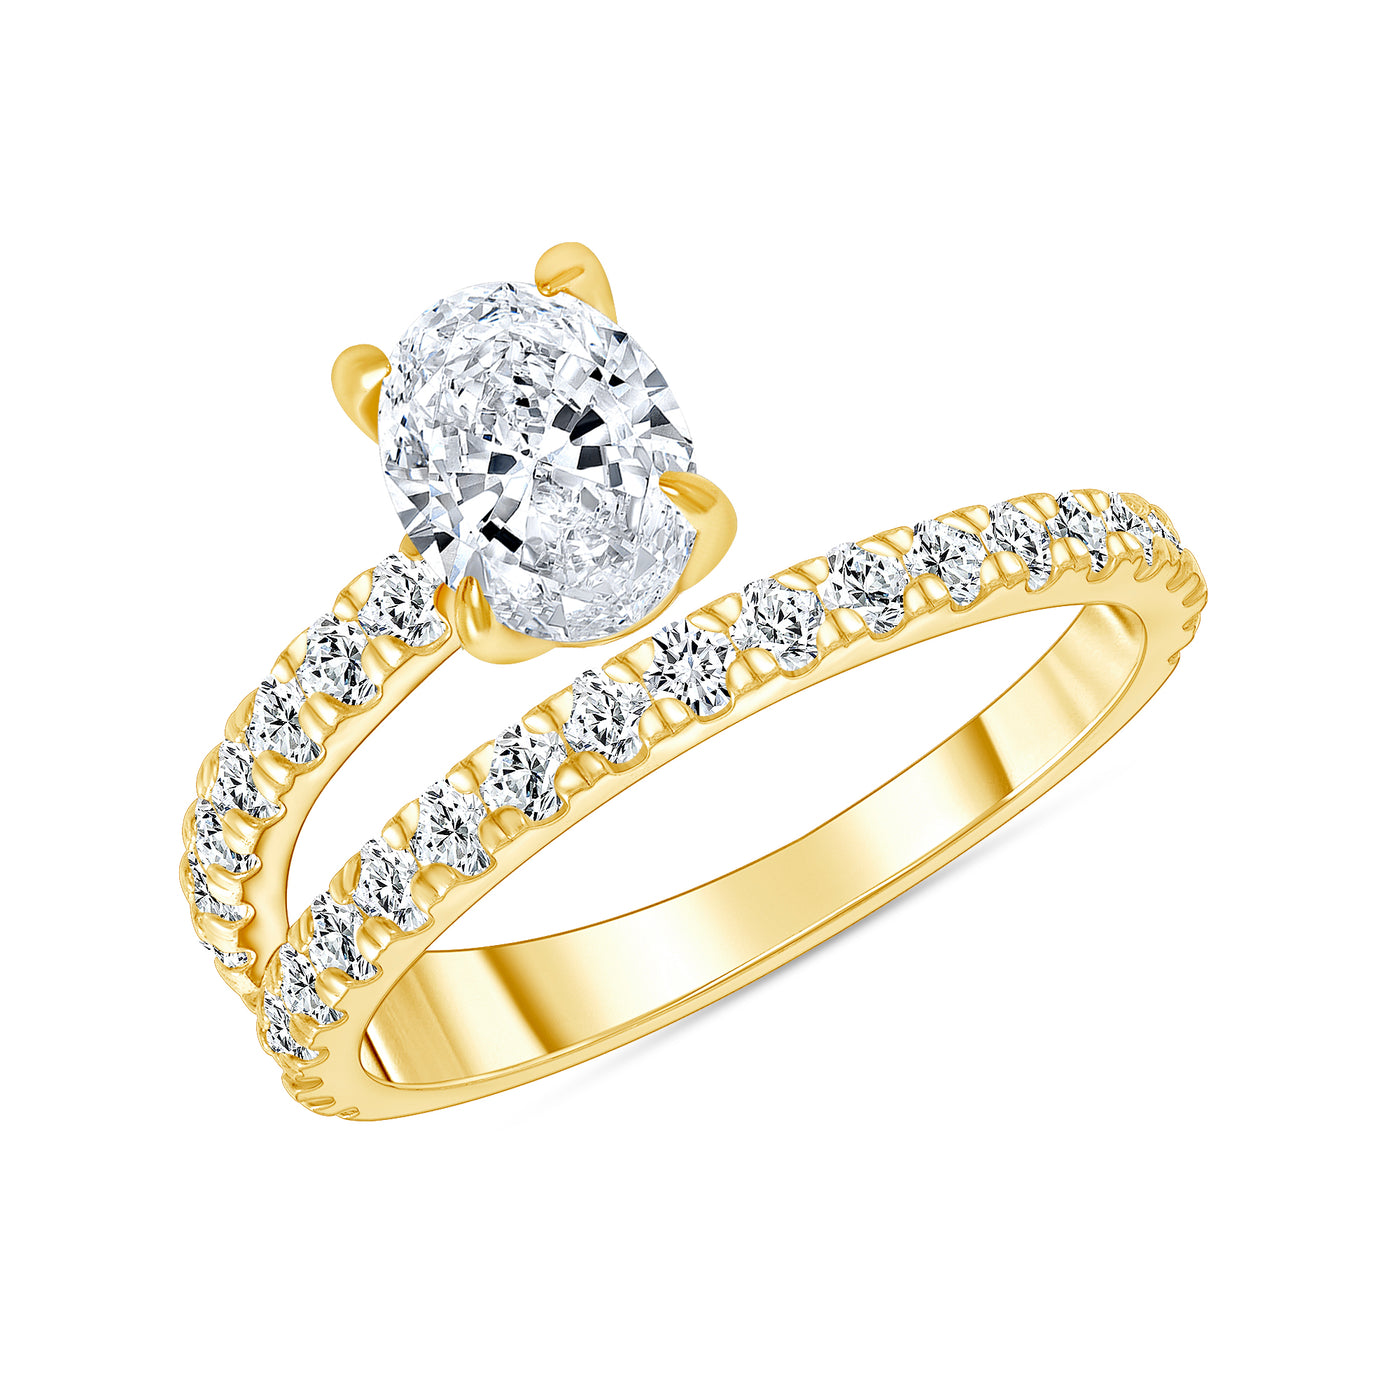 0.75 Carat Oval Cut Diamond Engagement Ring Design (0.50 Carat Center Diamond)